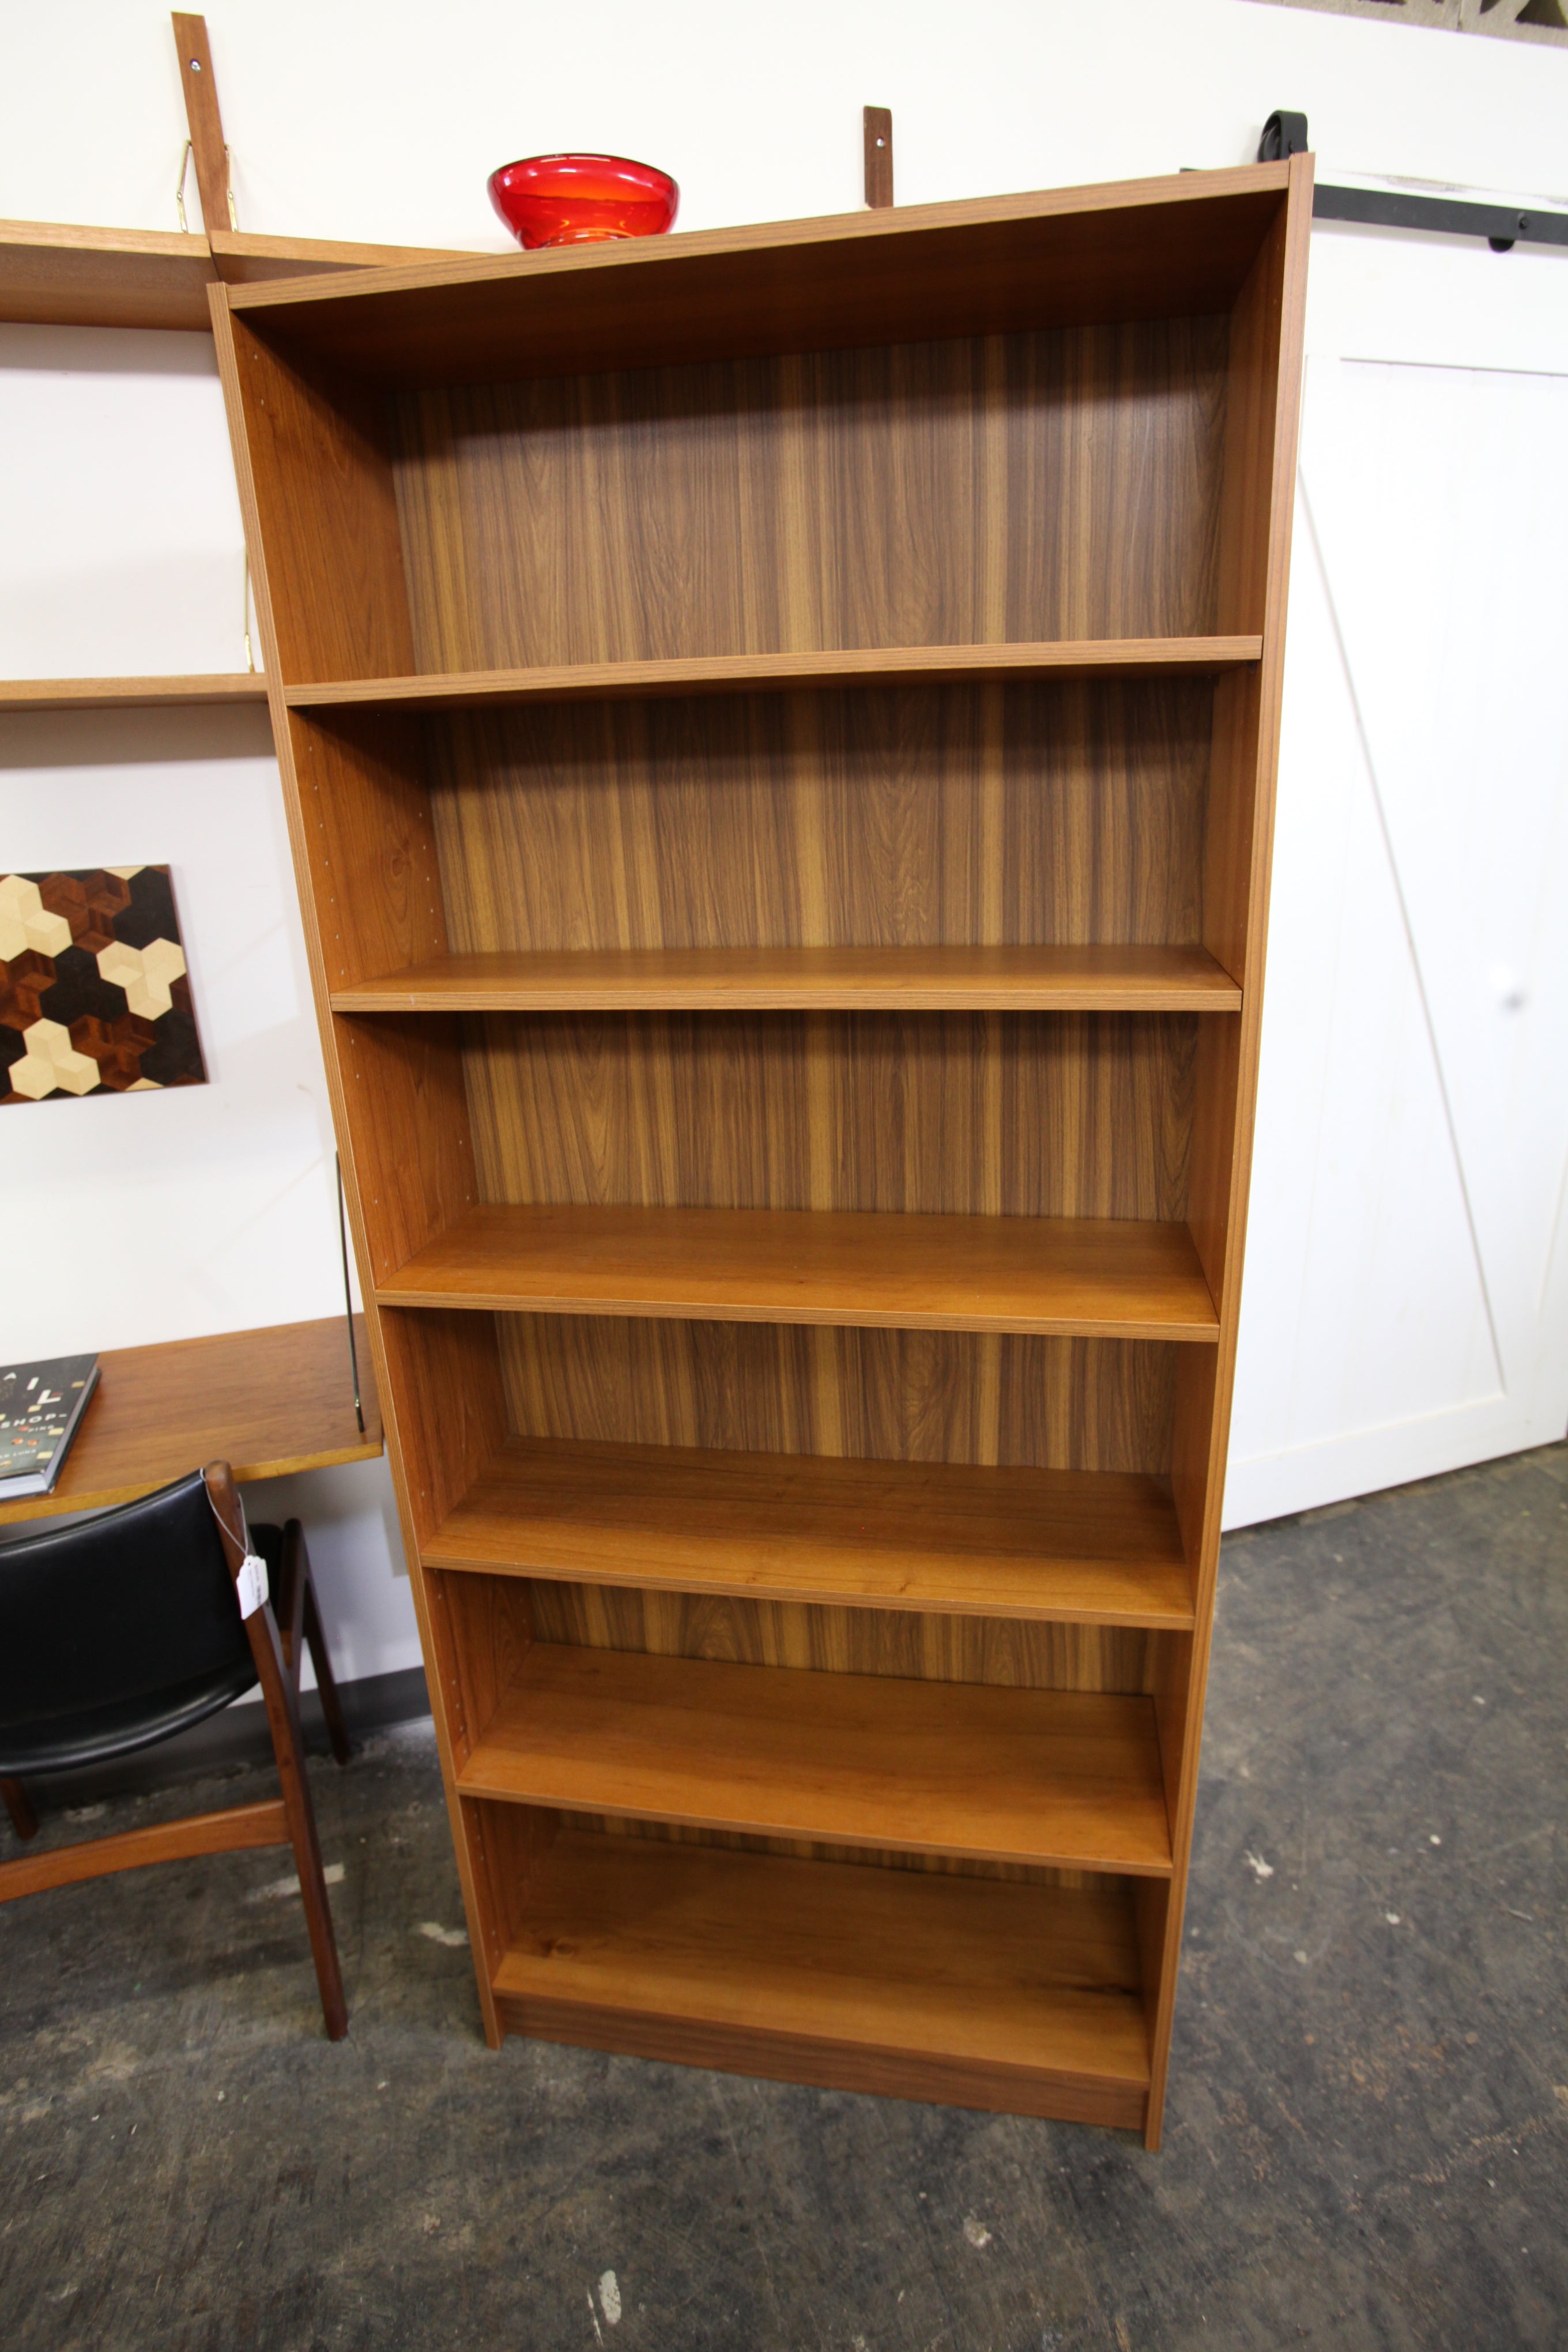 Vintage Danish Teak Bookshelf (31.5"W x 9.75"D x 72.75"H)